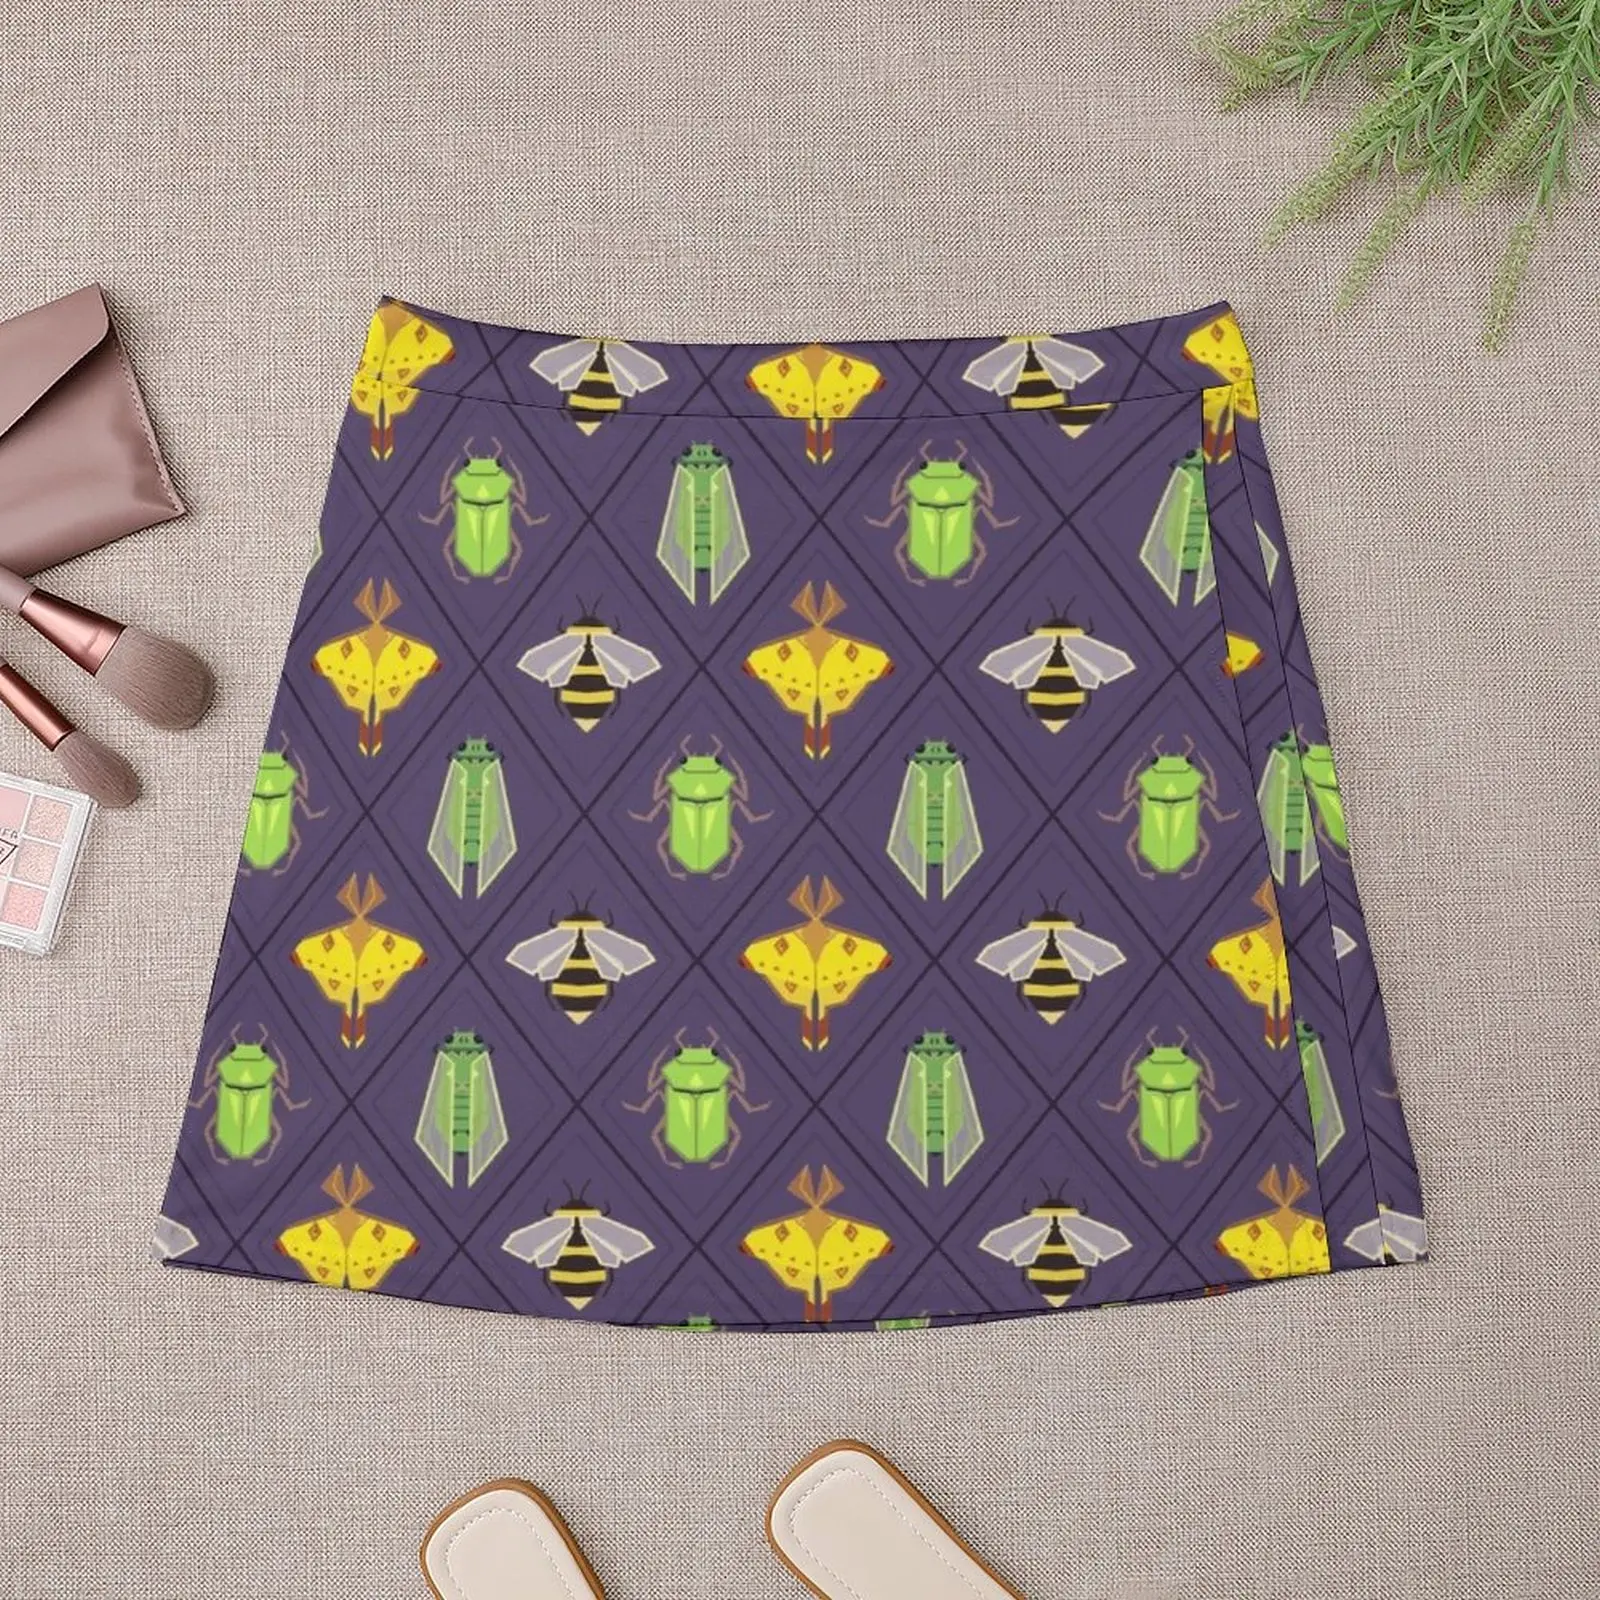 Insecta Geometrica - Geometric Insects Pattern Mini Skirt fashion luxury clothes women